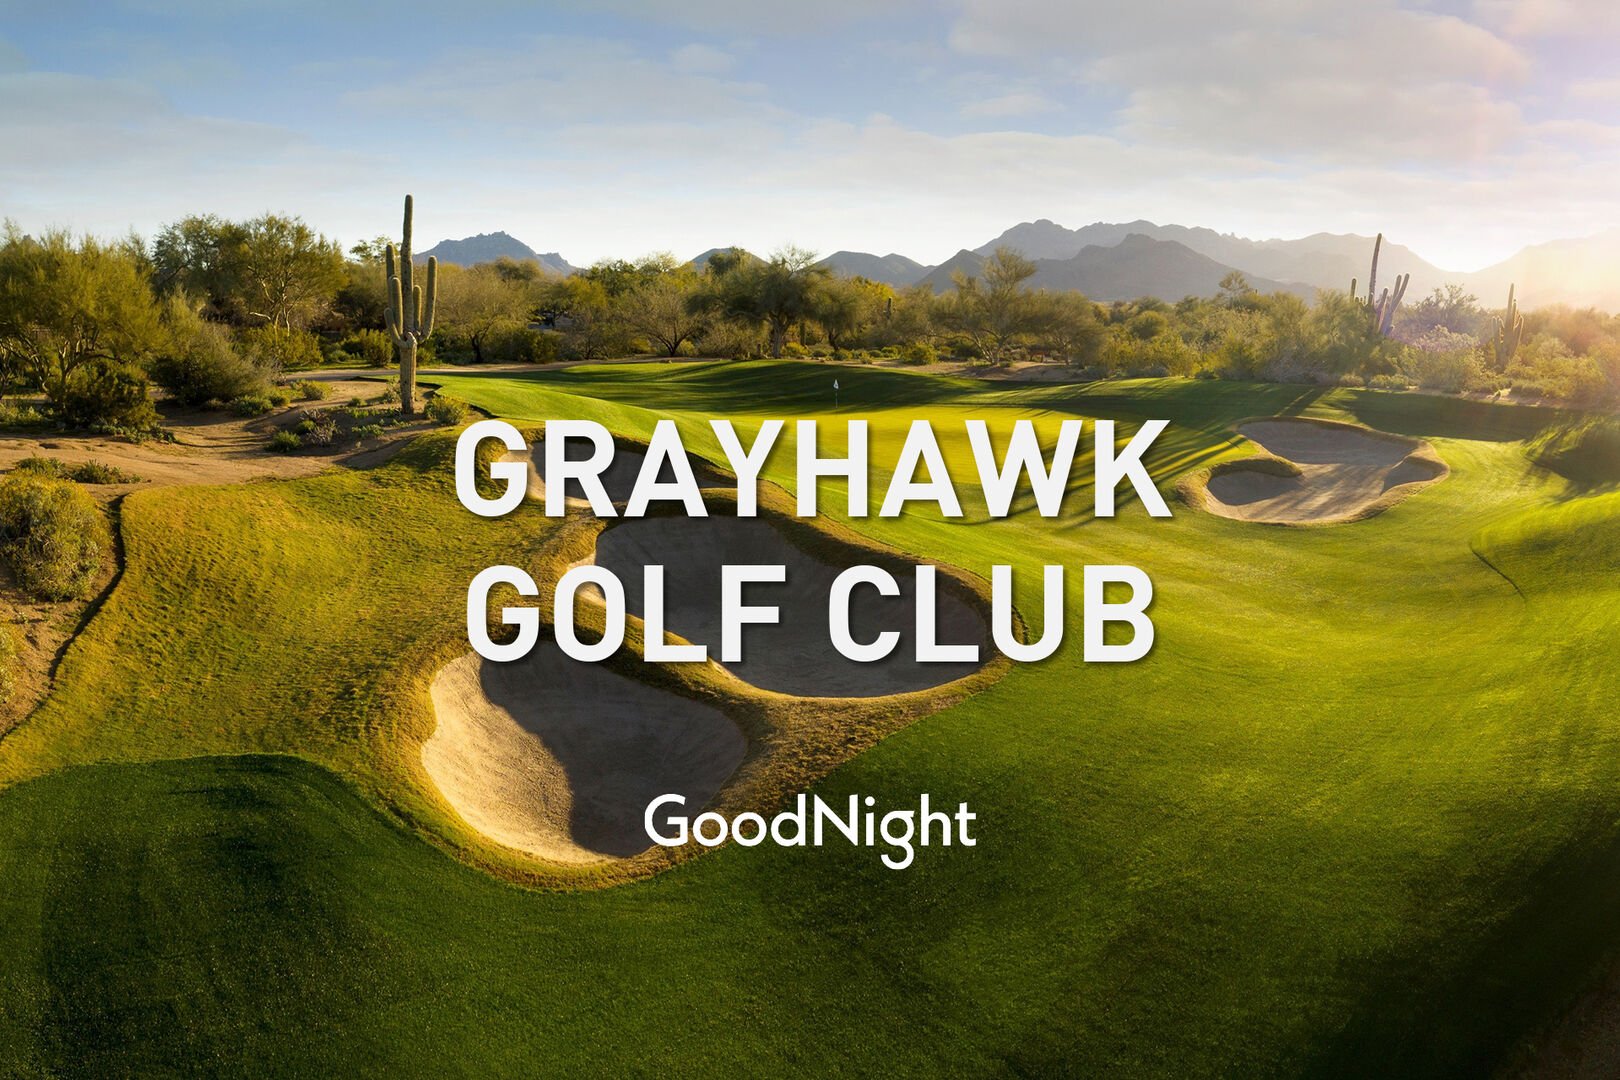 20 mins to Grayhawk Golf Club